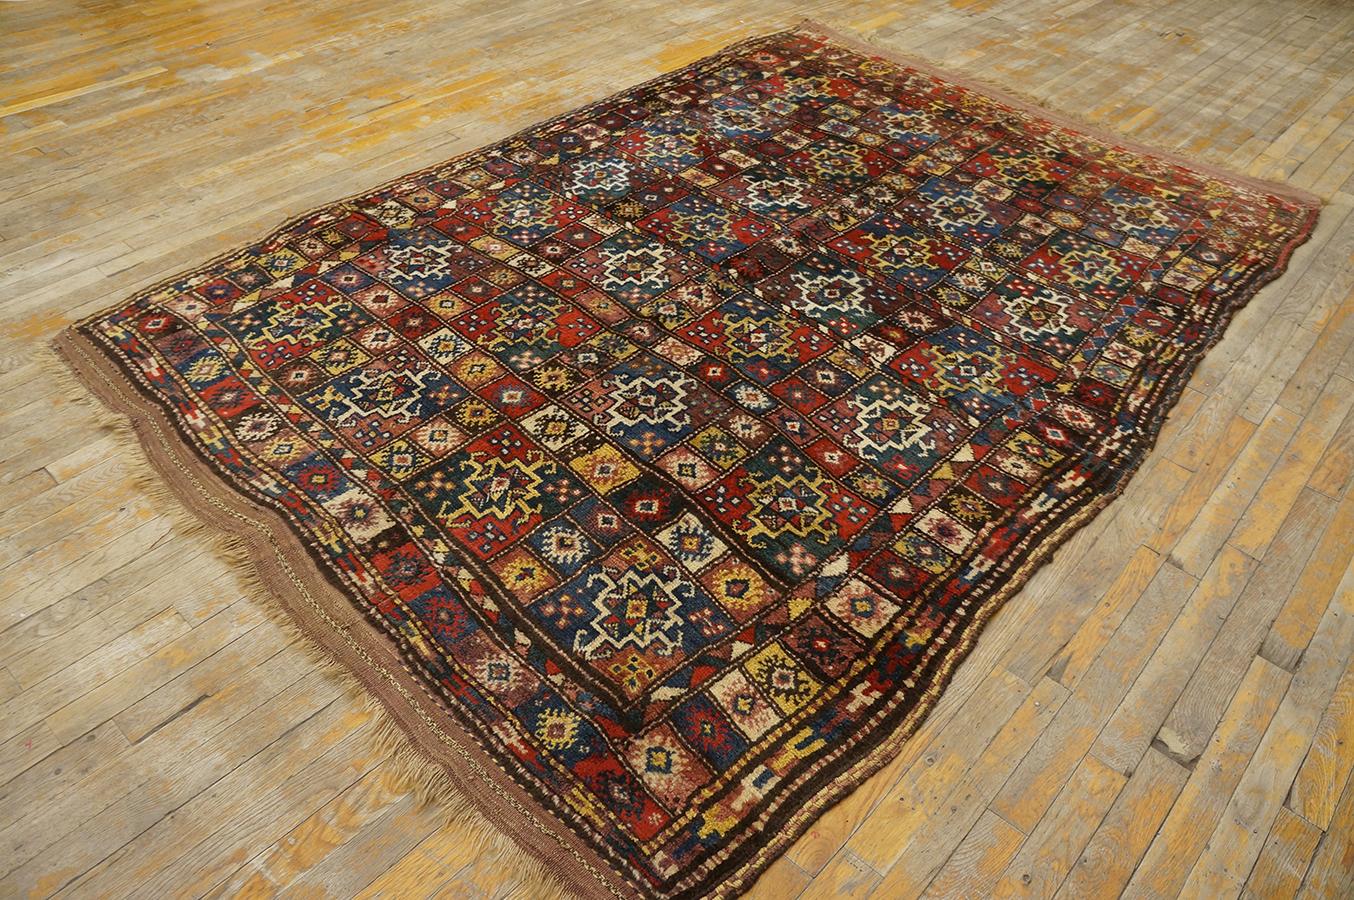 Antique Persian Quchan rug, size:5' 4'' x 7' 8''.